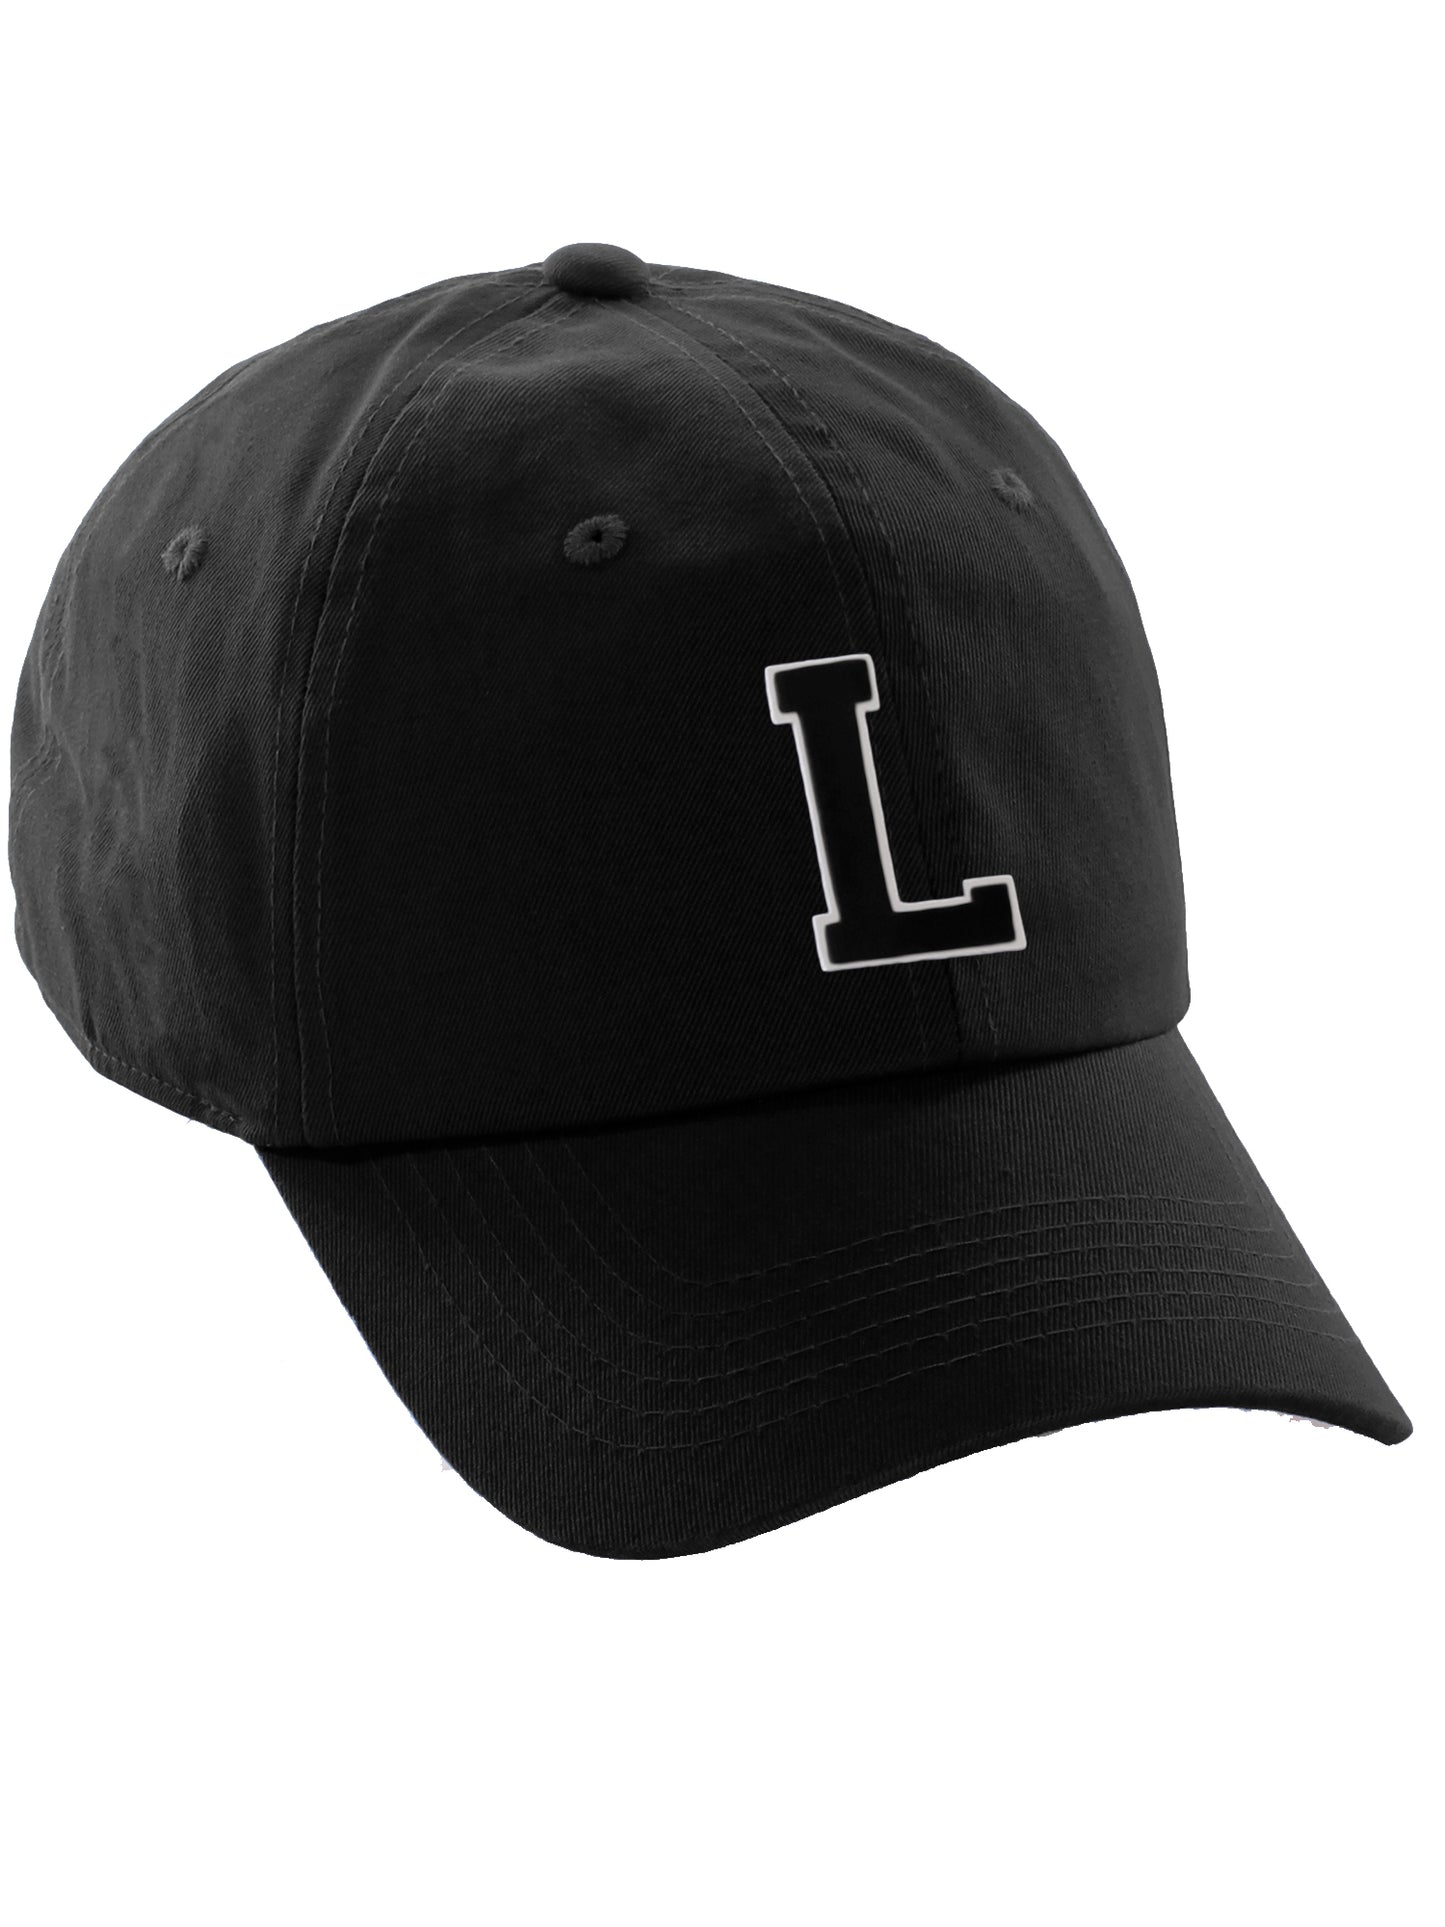 Custom Hat A to Z Initial Letters Classic Baseball Cap, Black Hat White Black